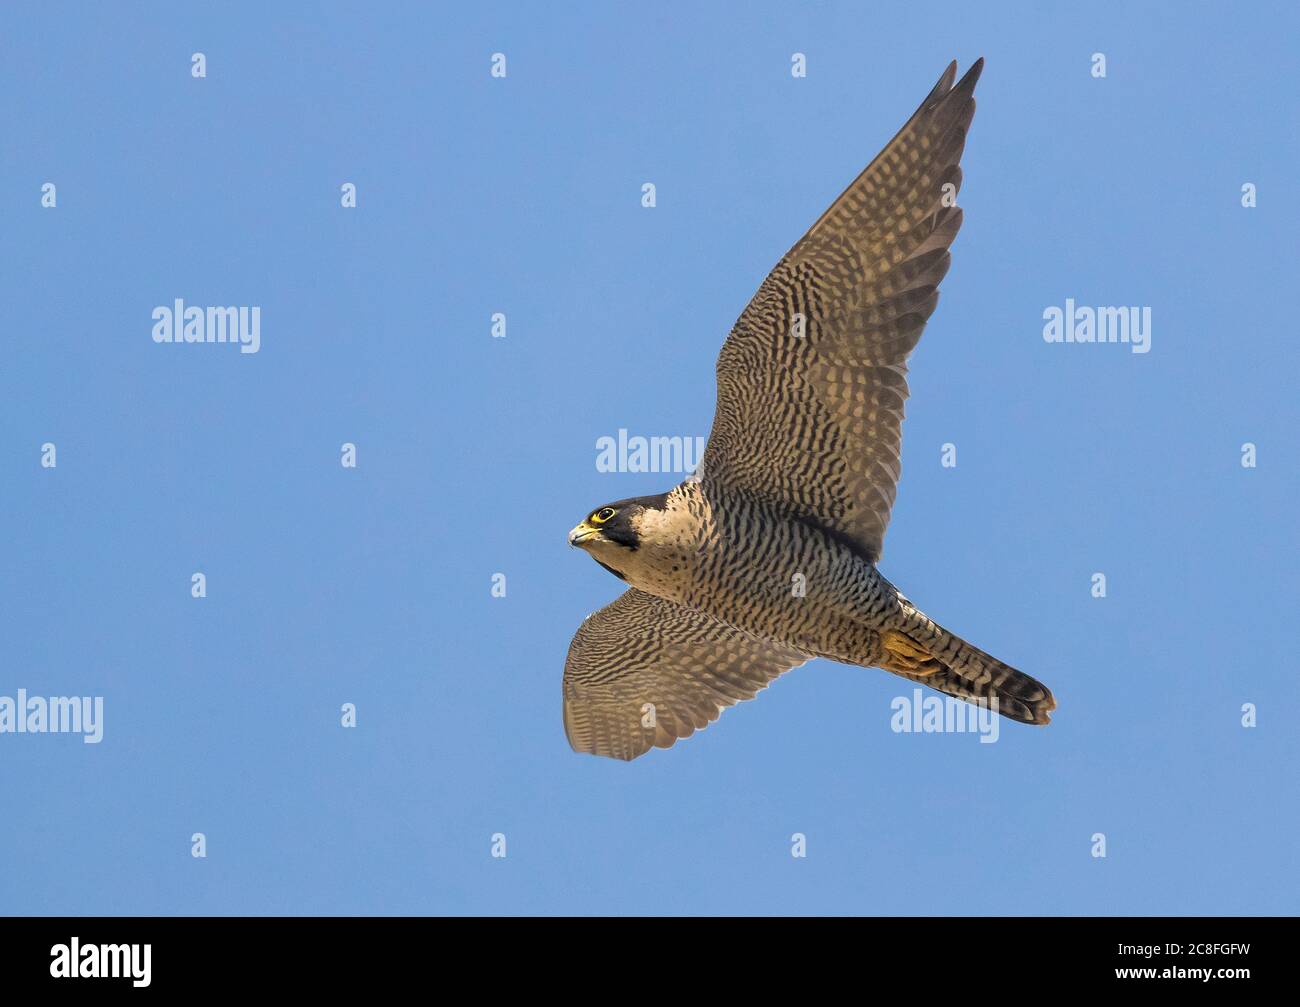 Mediterranean peregrine falcon (Falco peregrinus brookei, Falco brookei), in gliding flight, view from below, Italy, Piana fiorentina Stock Photo